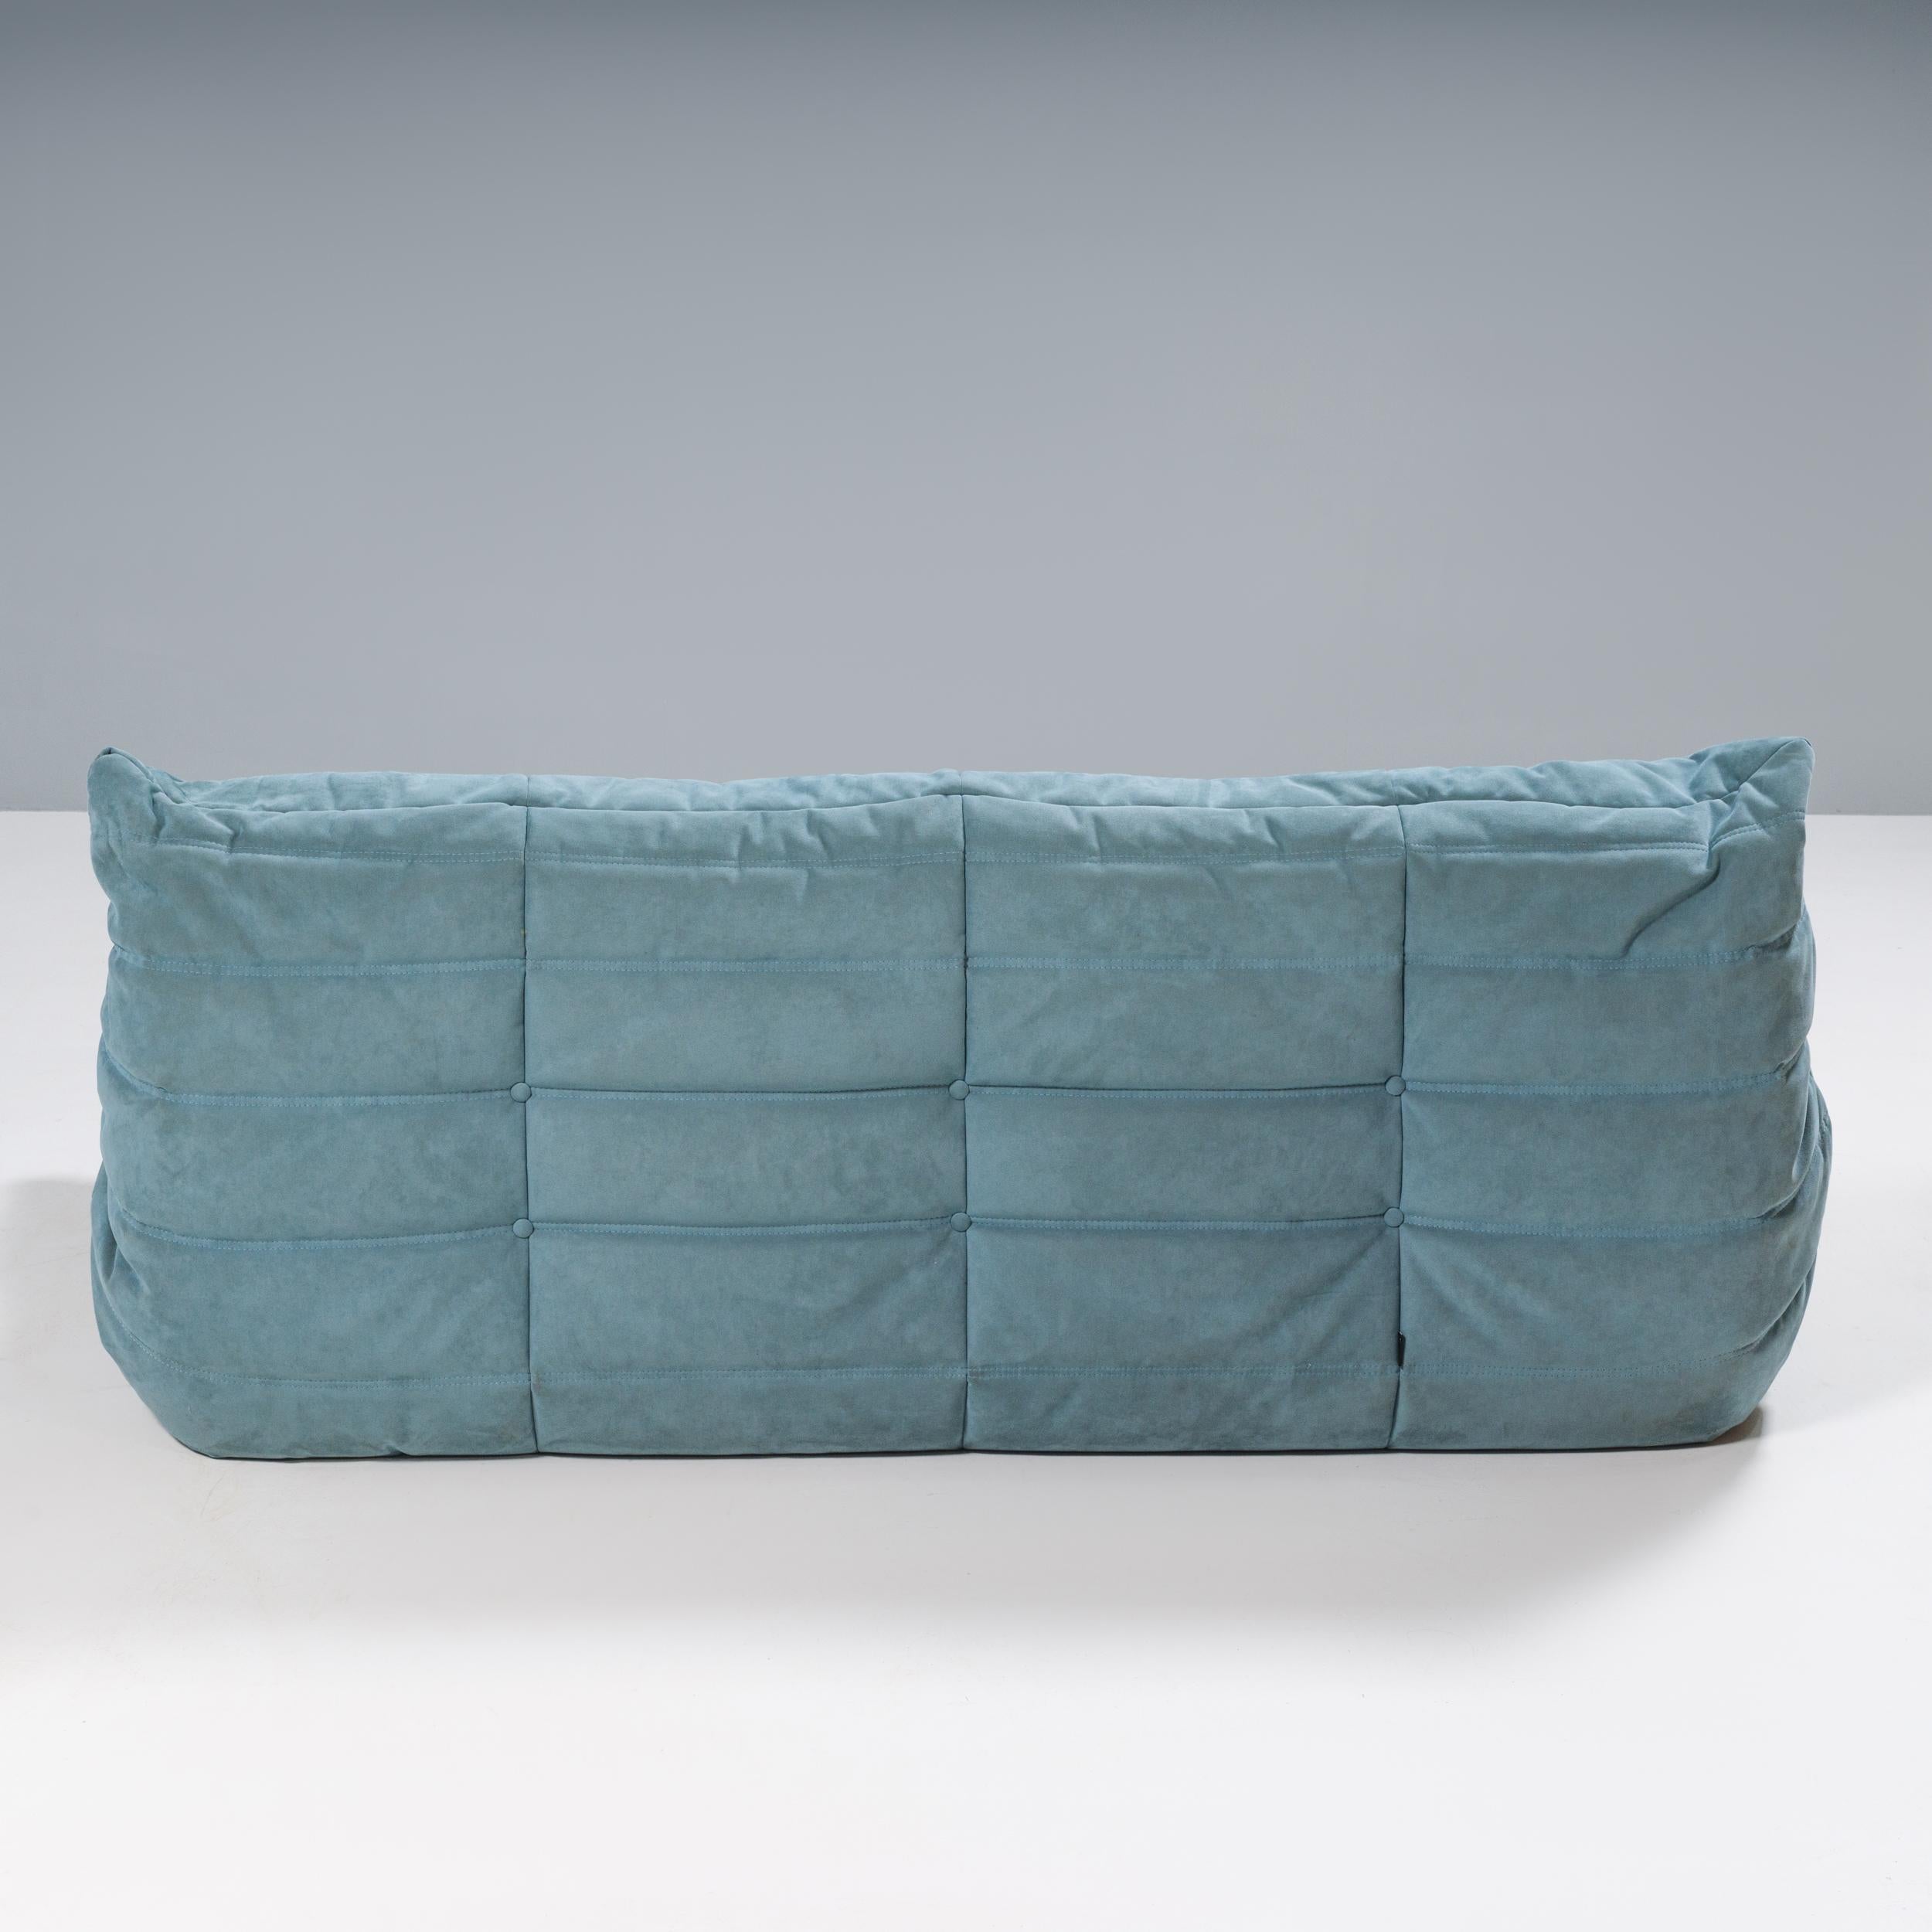 Late 20th Century Michel Ducaroy for Ligne Roset Togo Pale Blue Modular Sofa, Set of 2